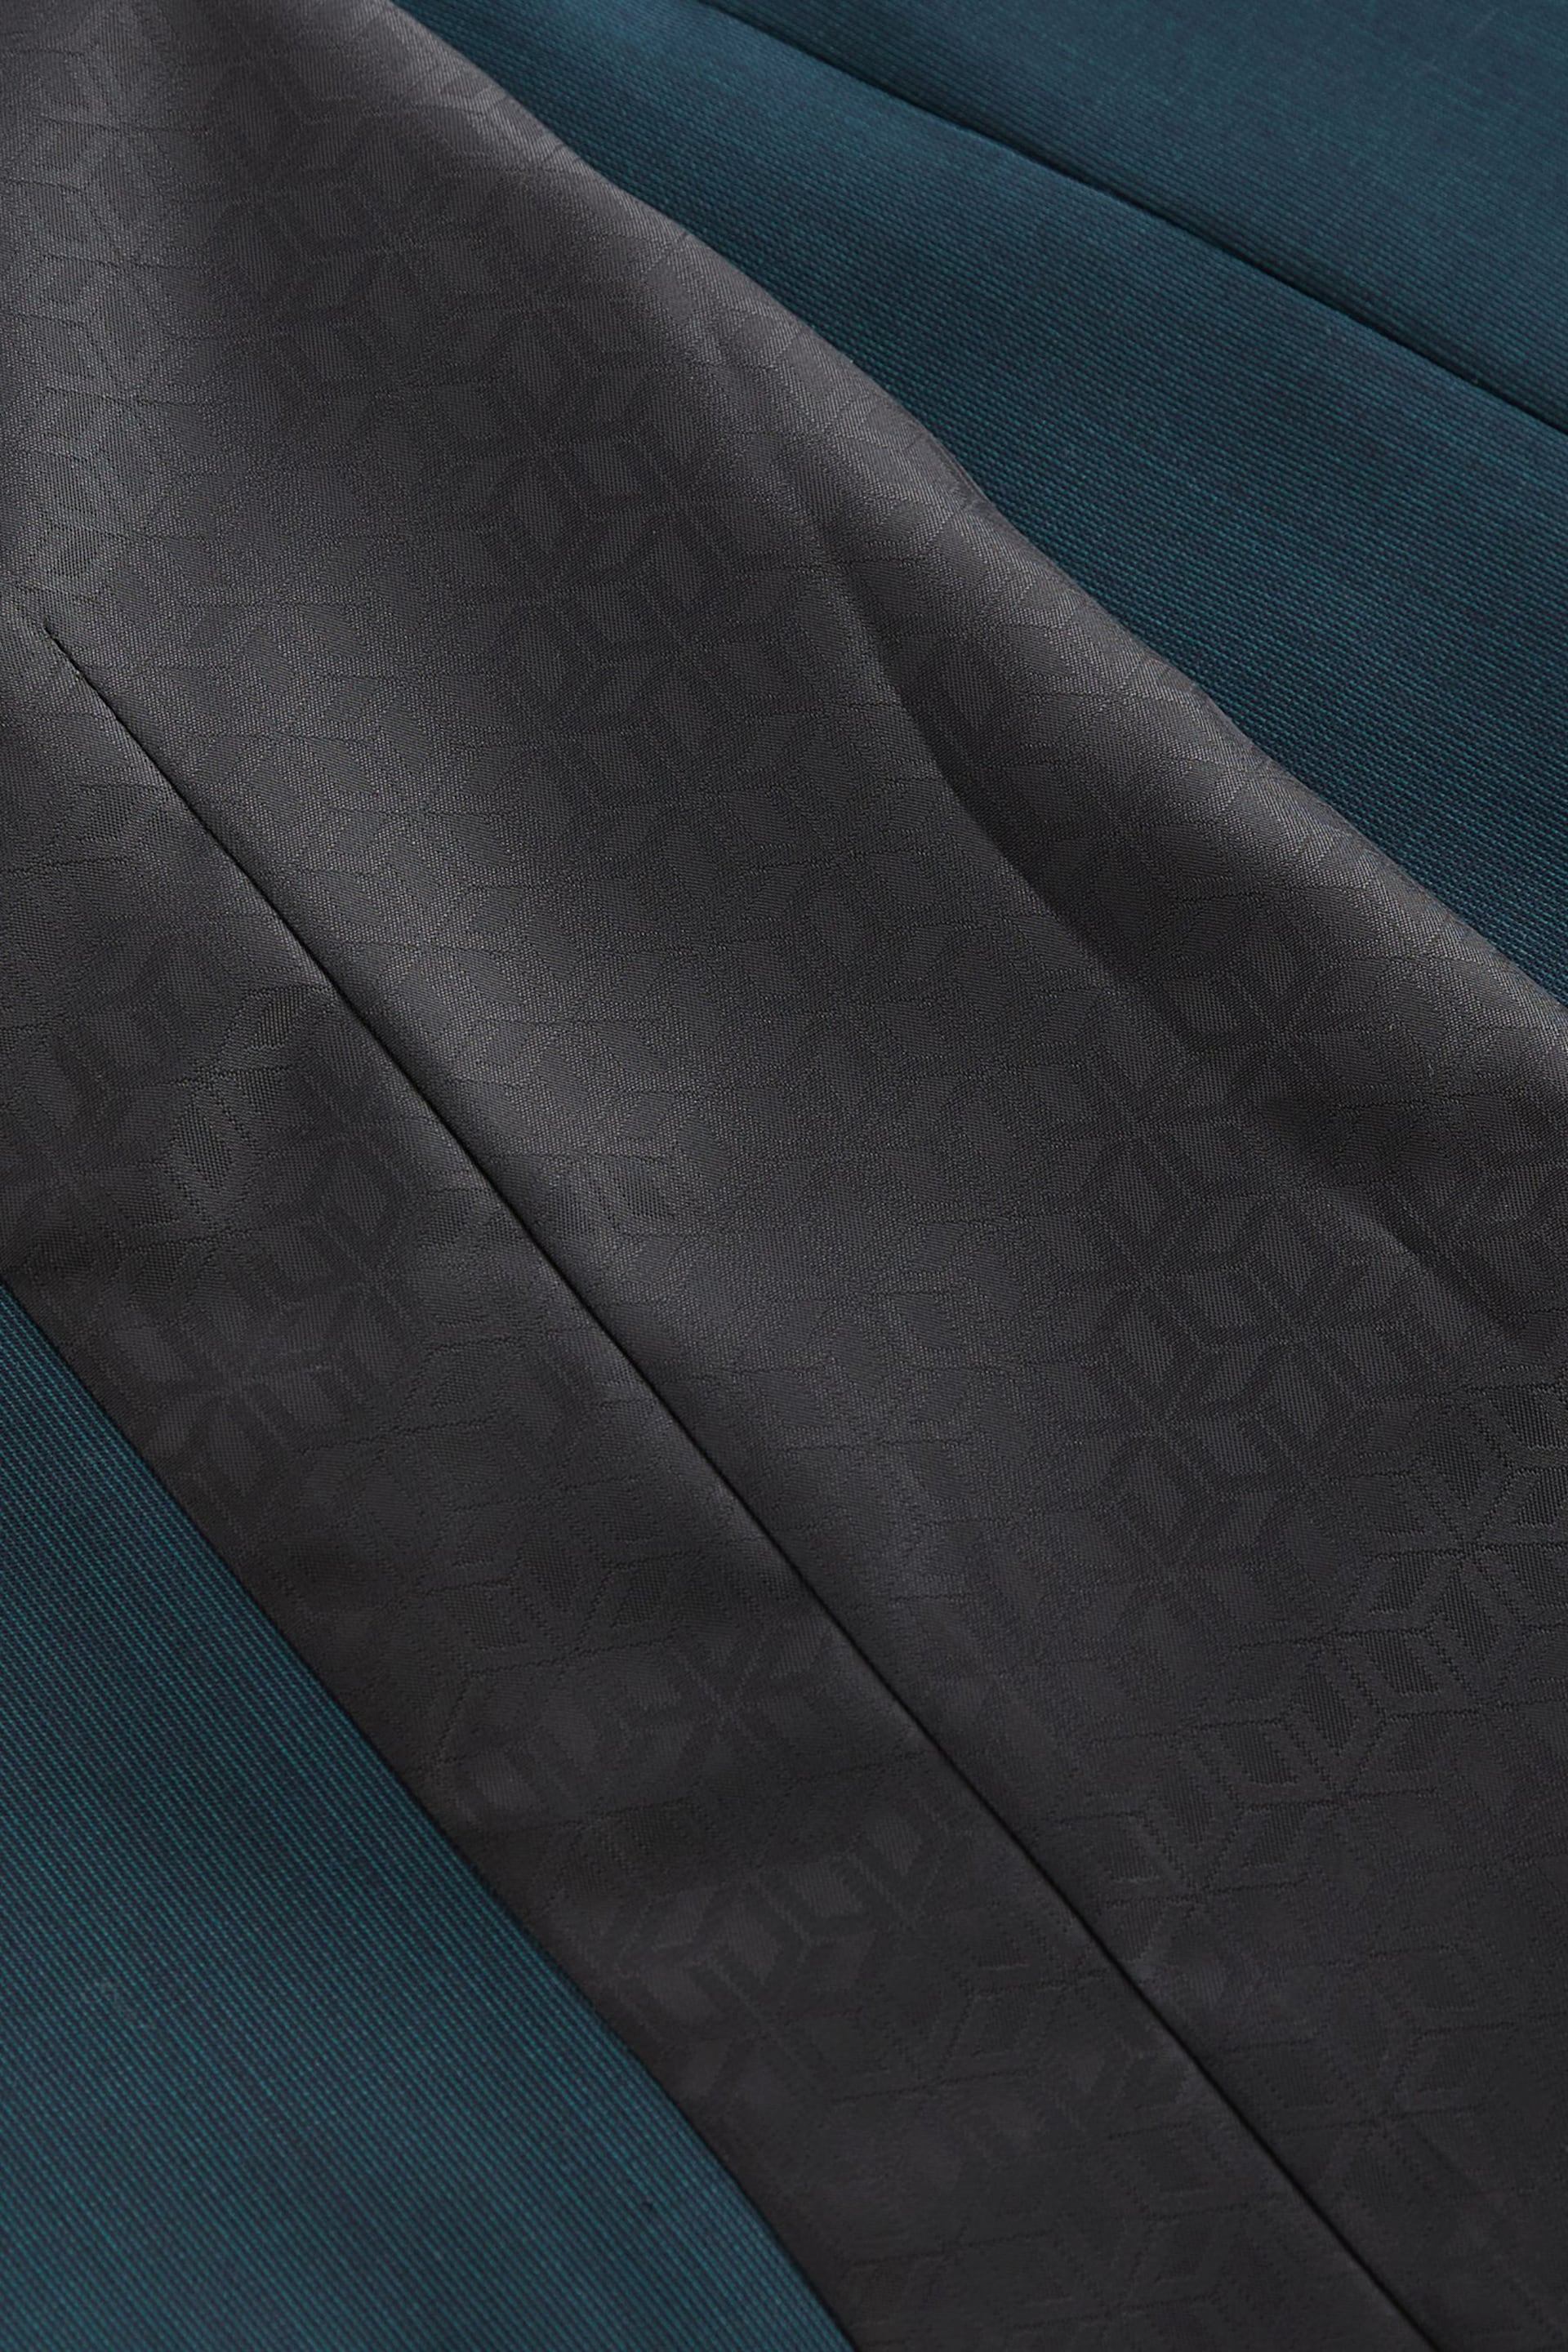 Teal Blue Wool Blend Suit Waistcoat - Image 8 of 10